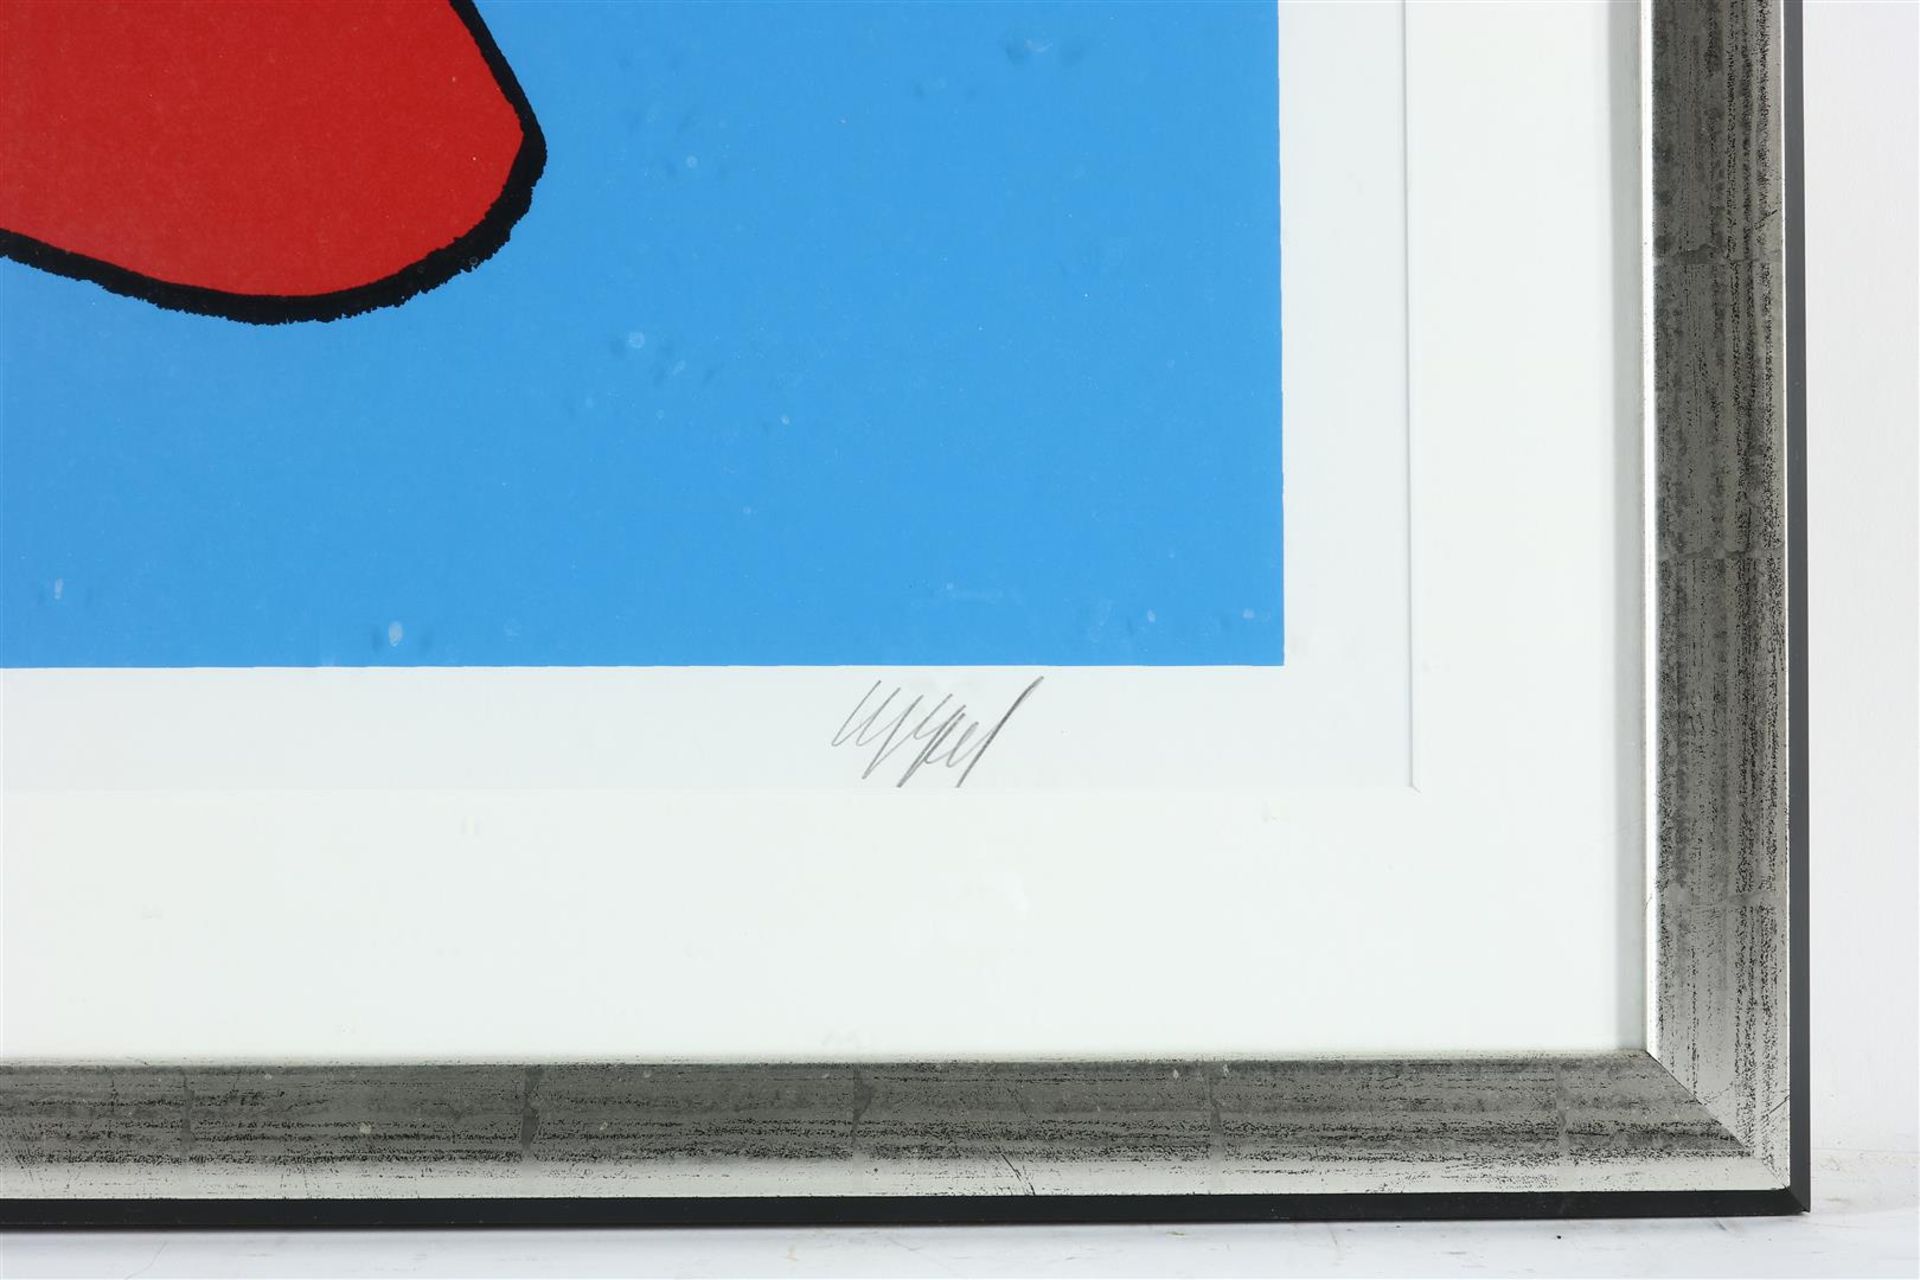 Karel Appel (1921-2006) 'Cool Hand Luke', signed lower right, screen print 5/100, 102 x 70 cm. - Image 3 of 4